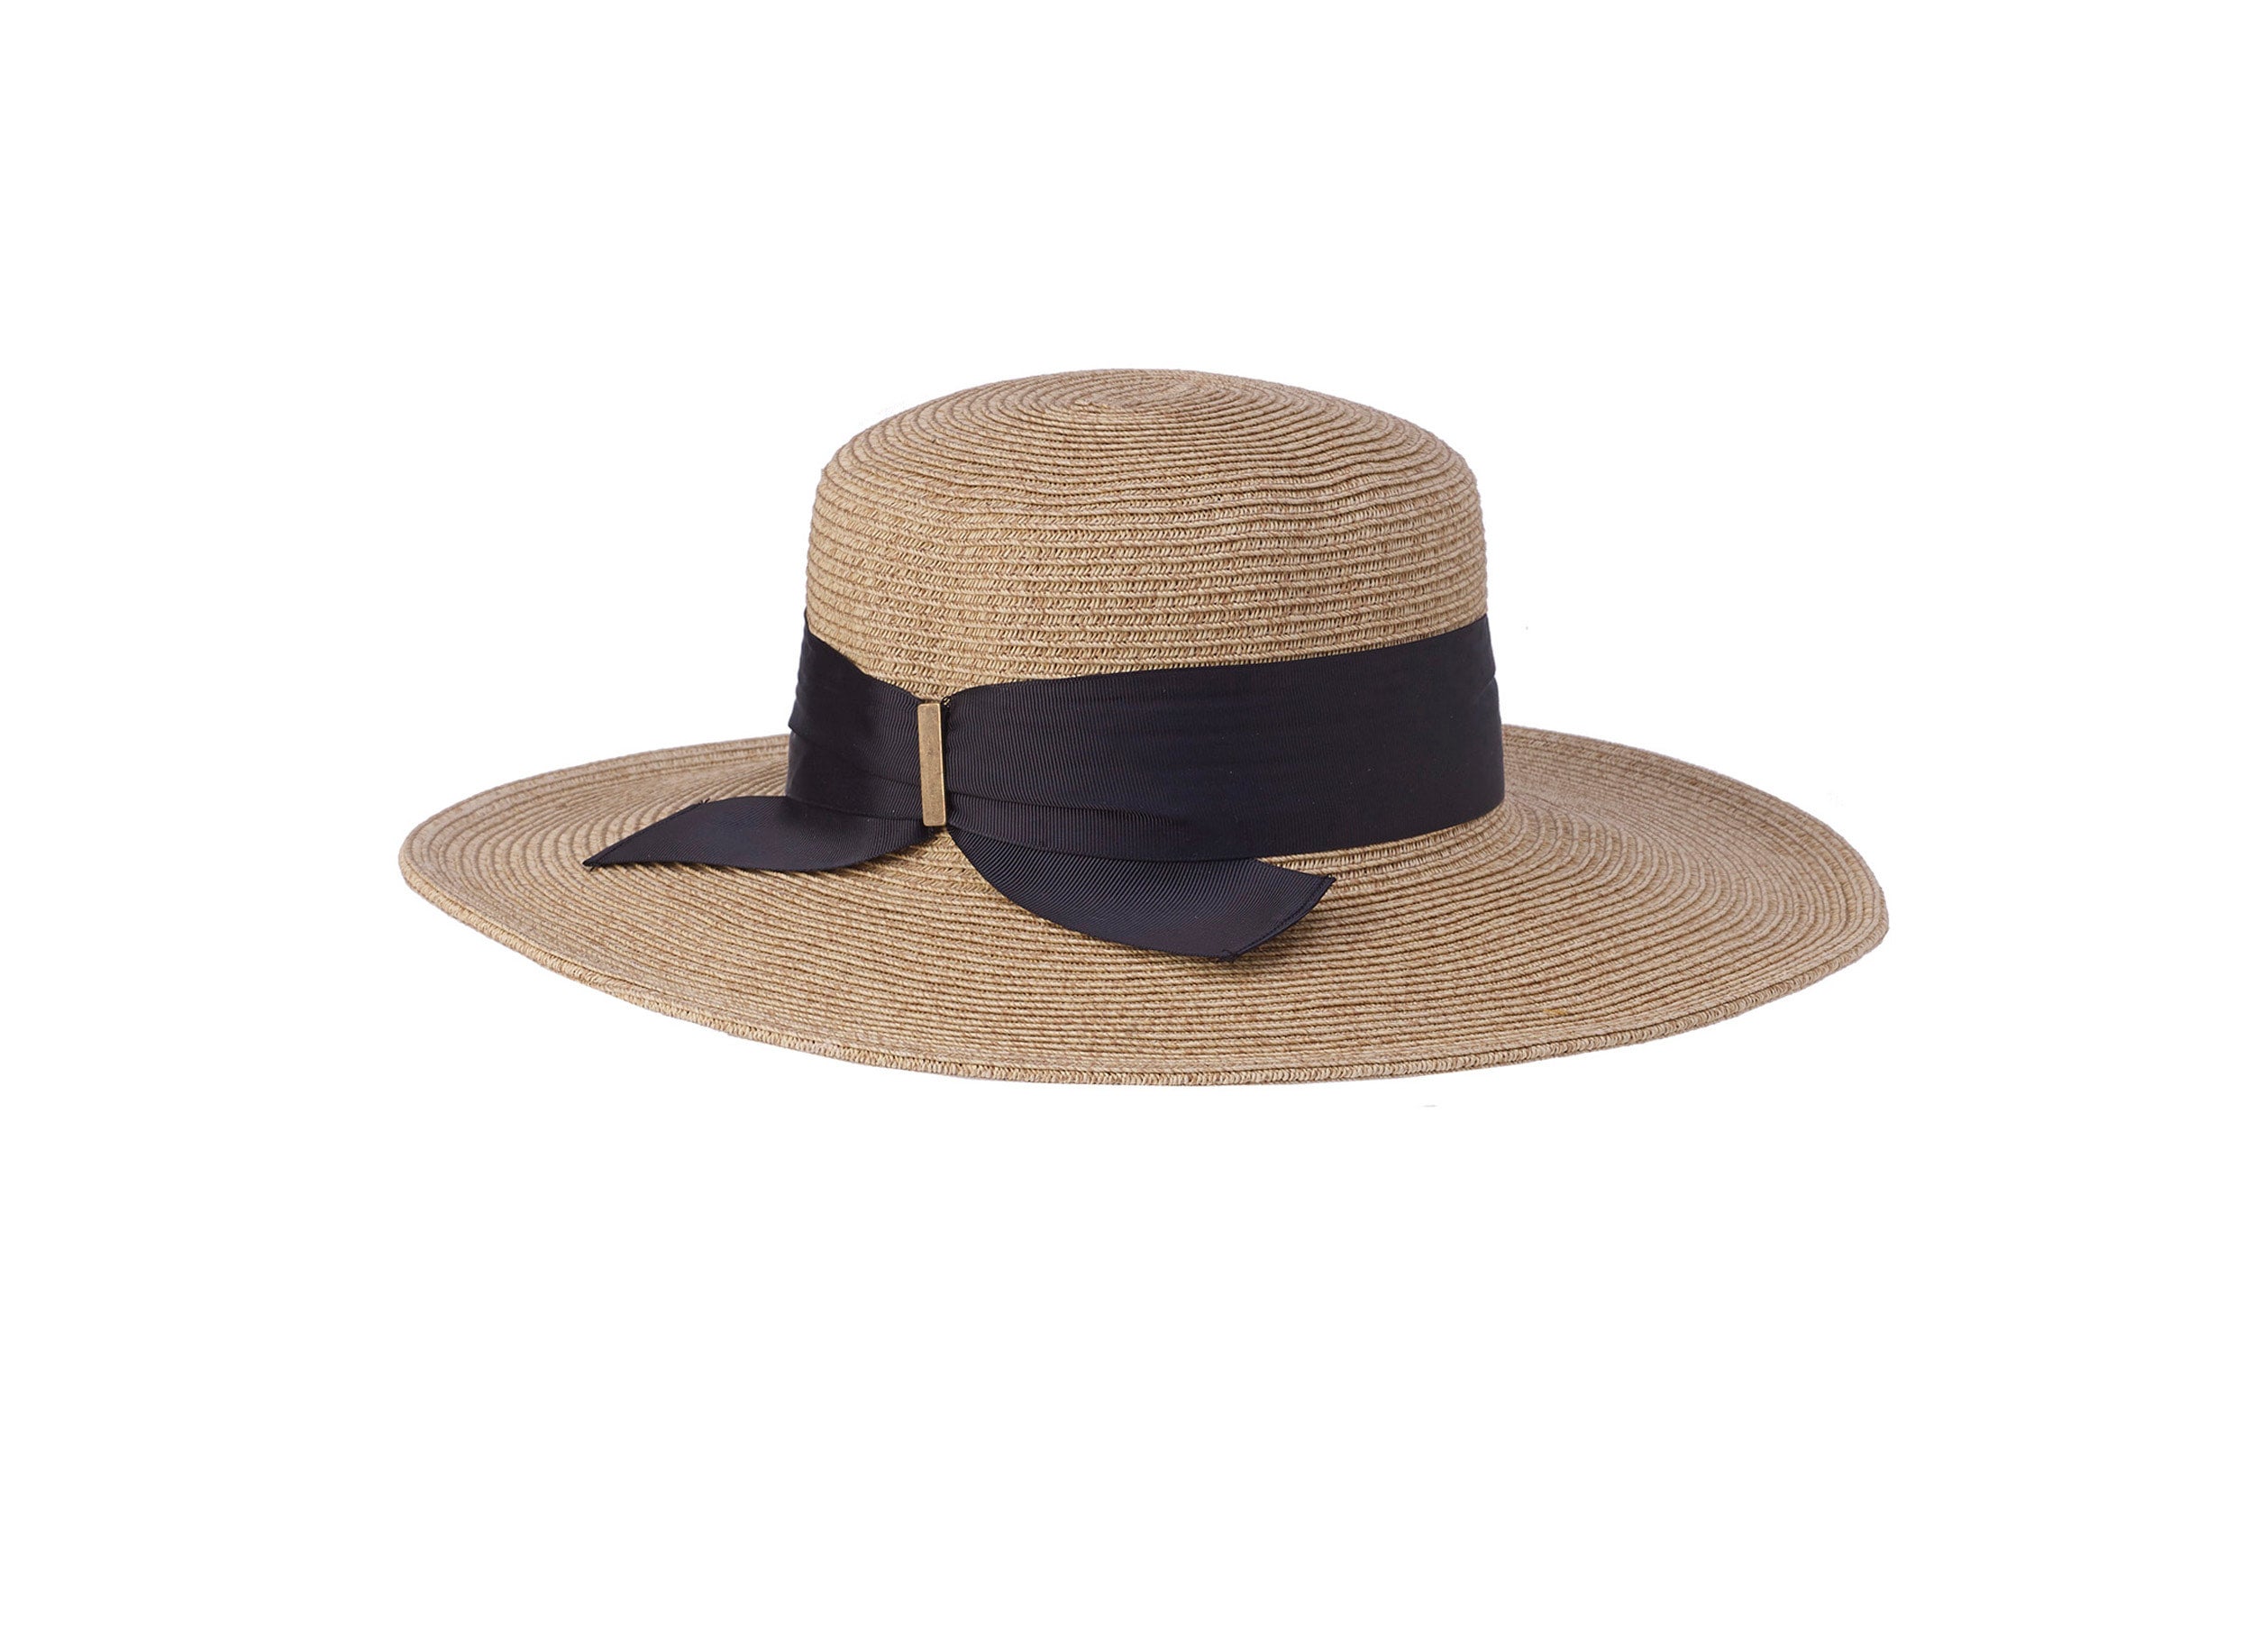 Tucan Wide Brimmed Straw Hat